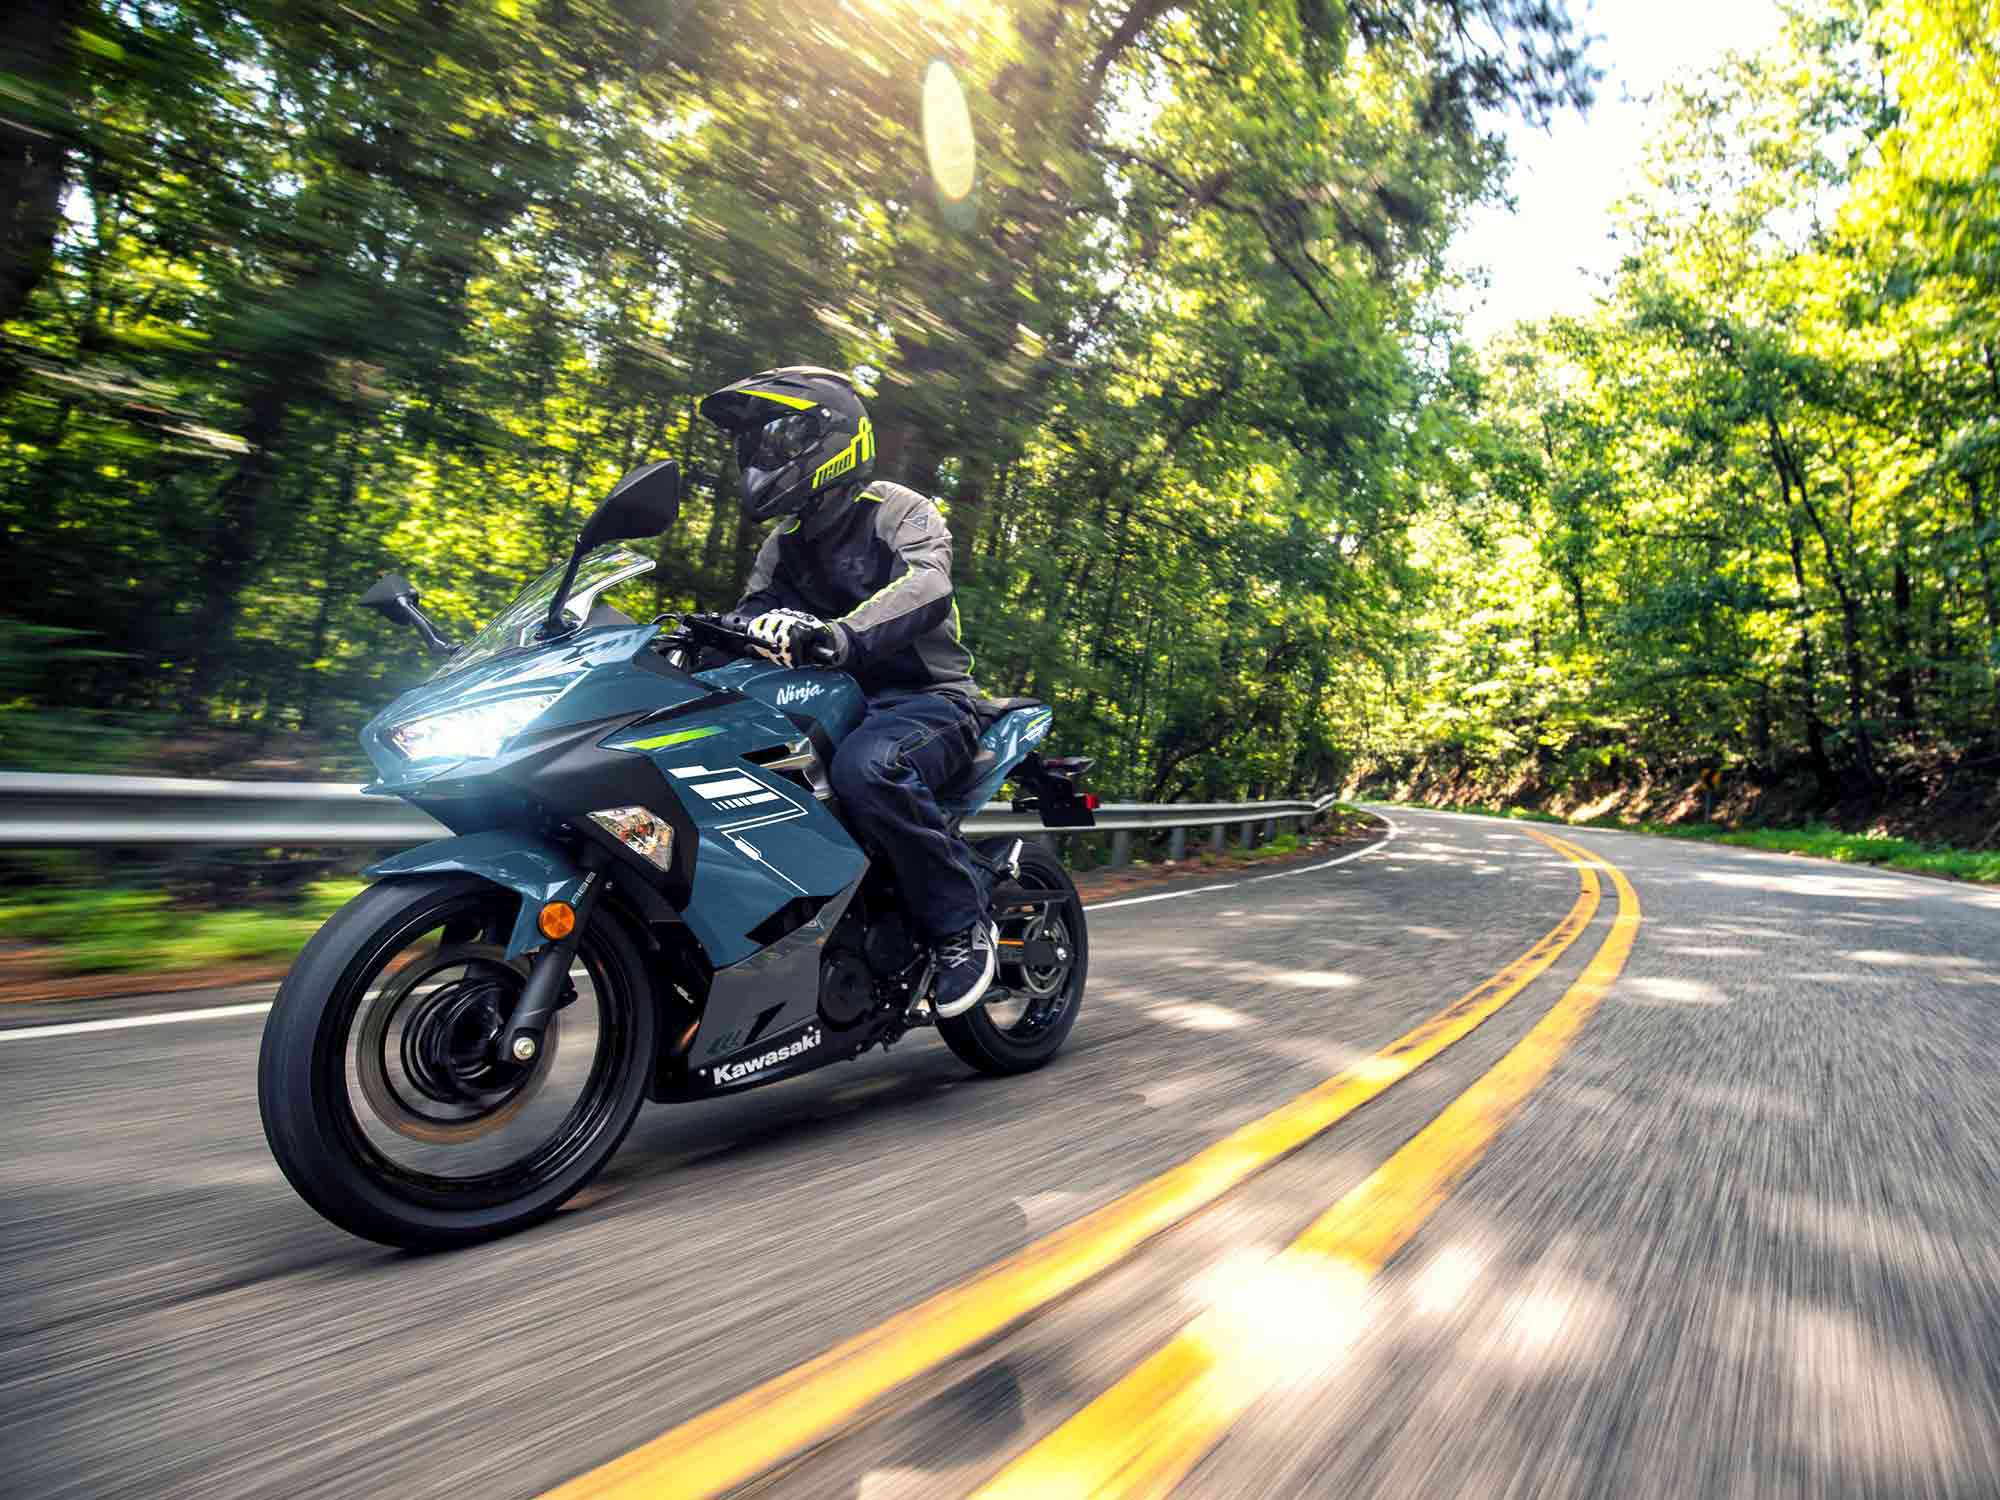 An approachable sportbike, the Kawasaki Ninja 400 would make a great first ride.